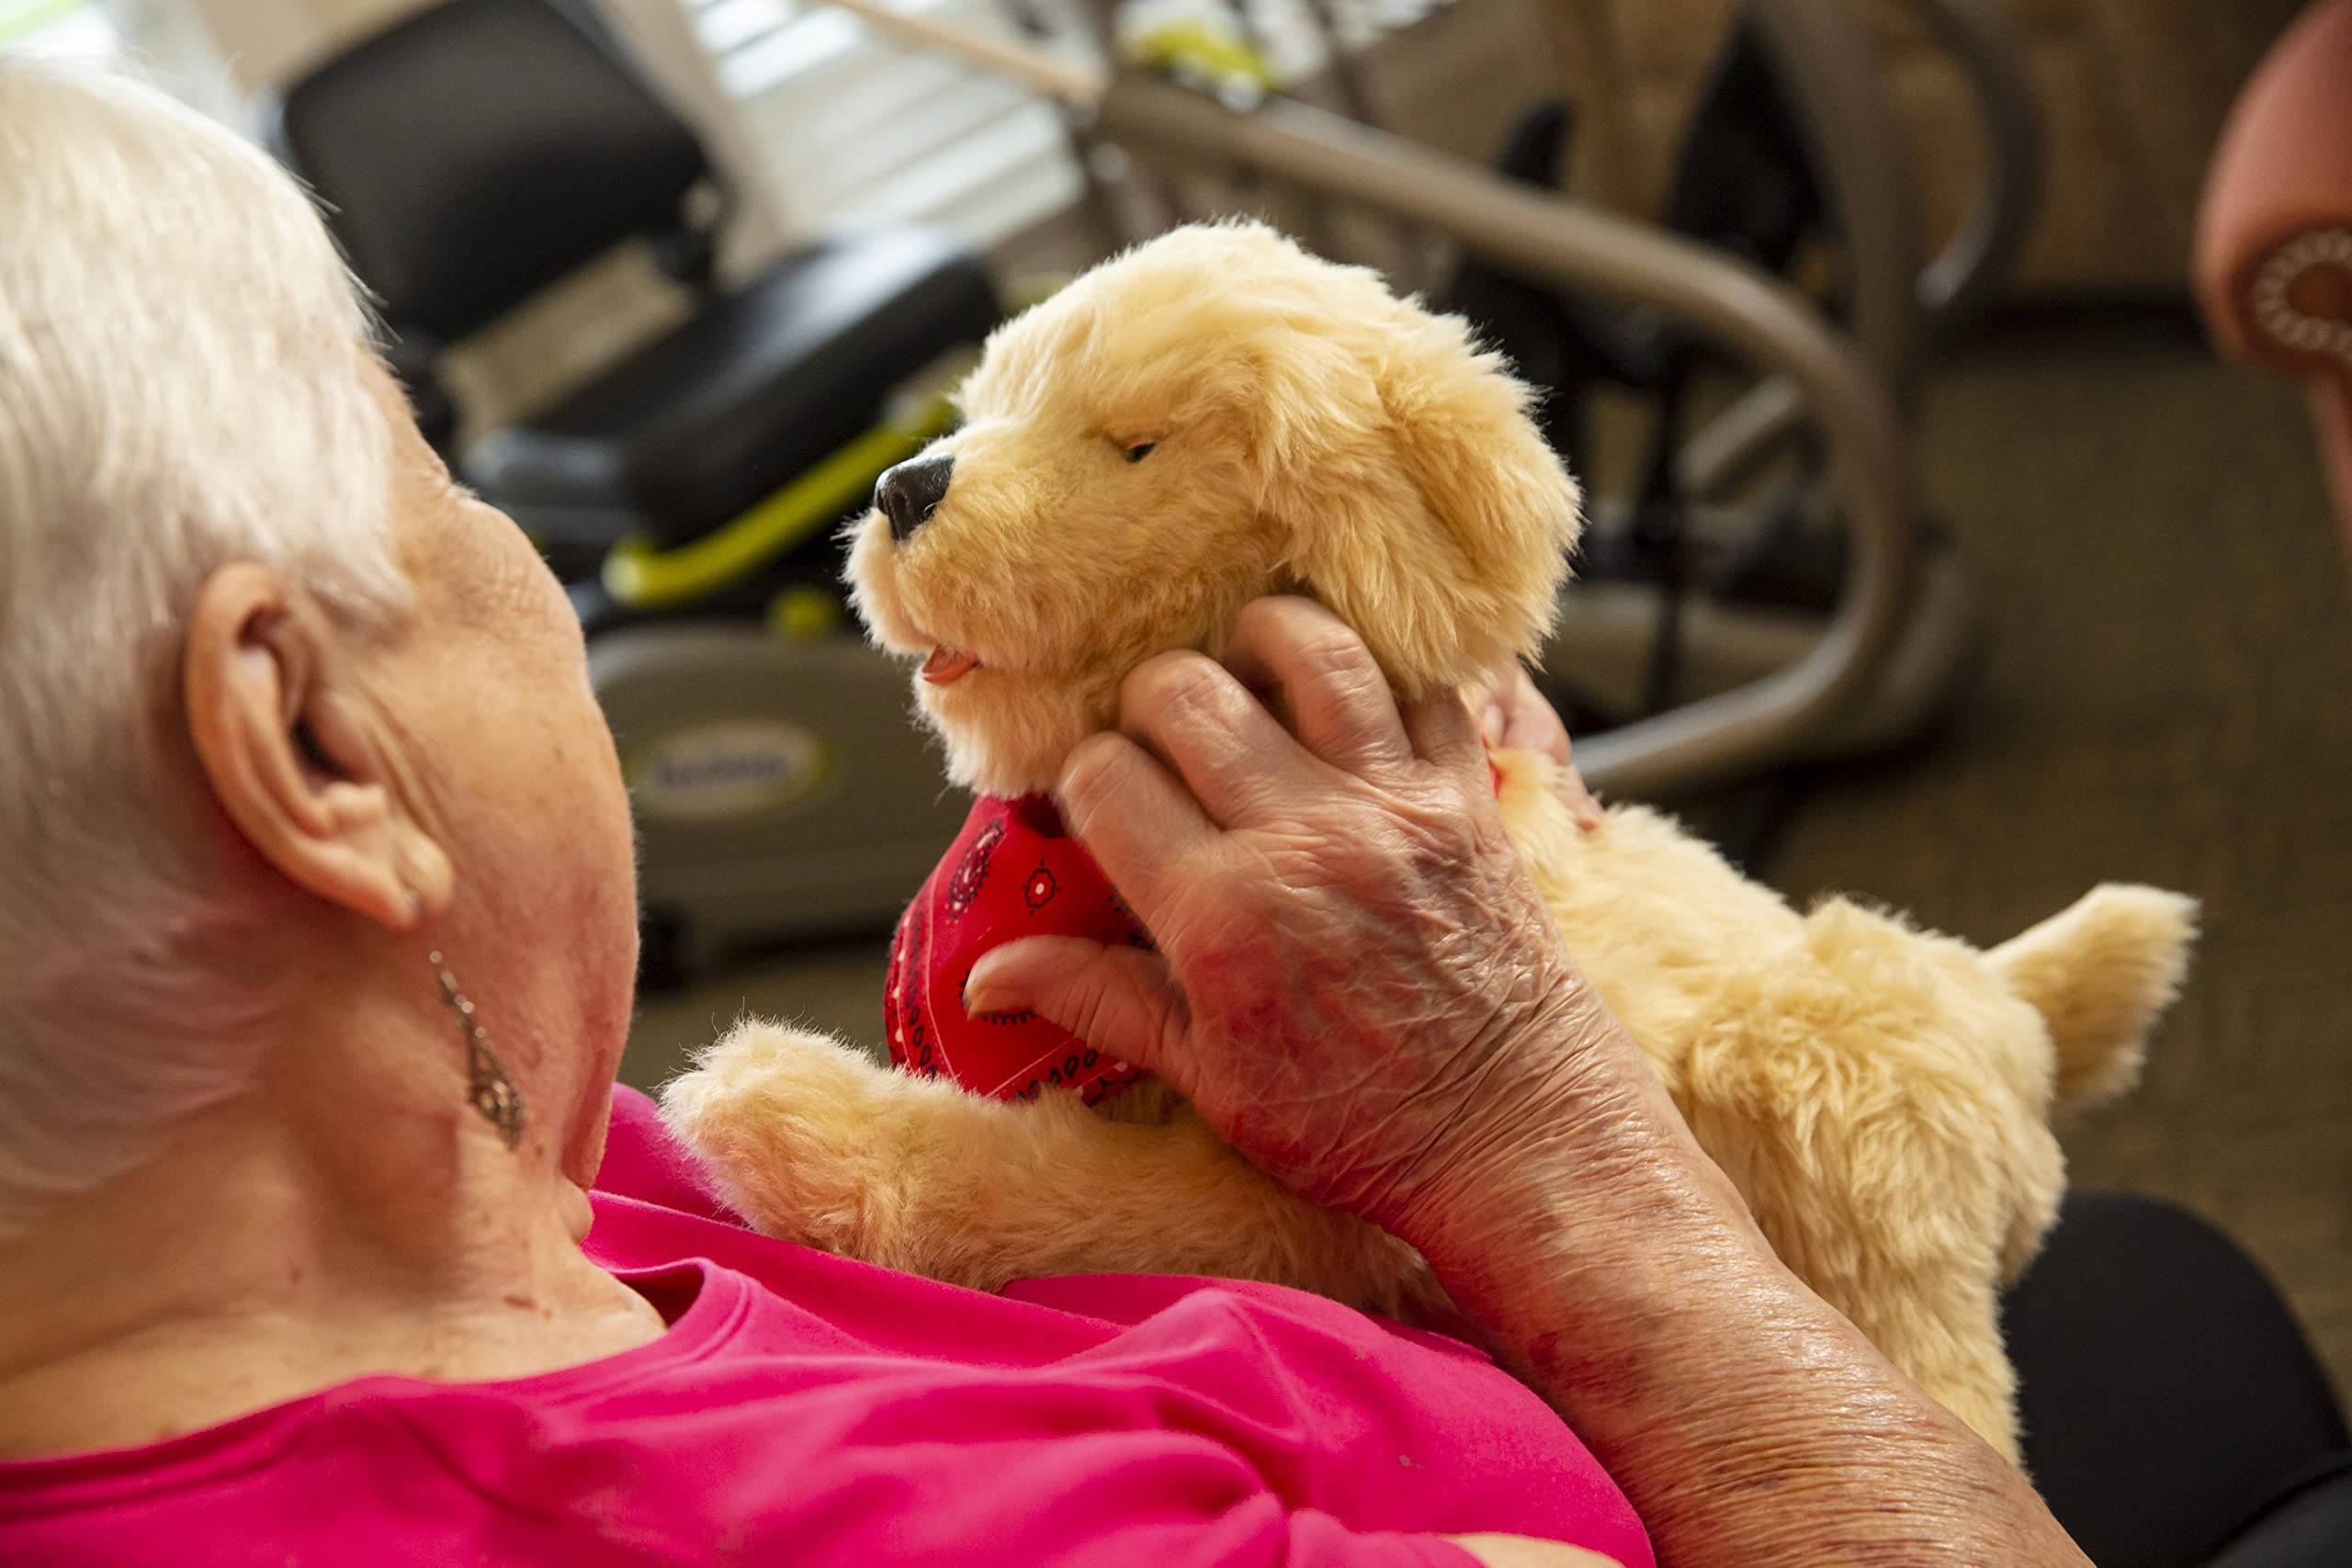 JOY FOR ALL Ageless Innovation Companion Pets Golden Pup Lifelike & Realistic